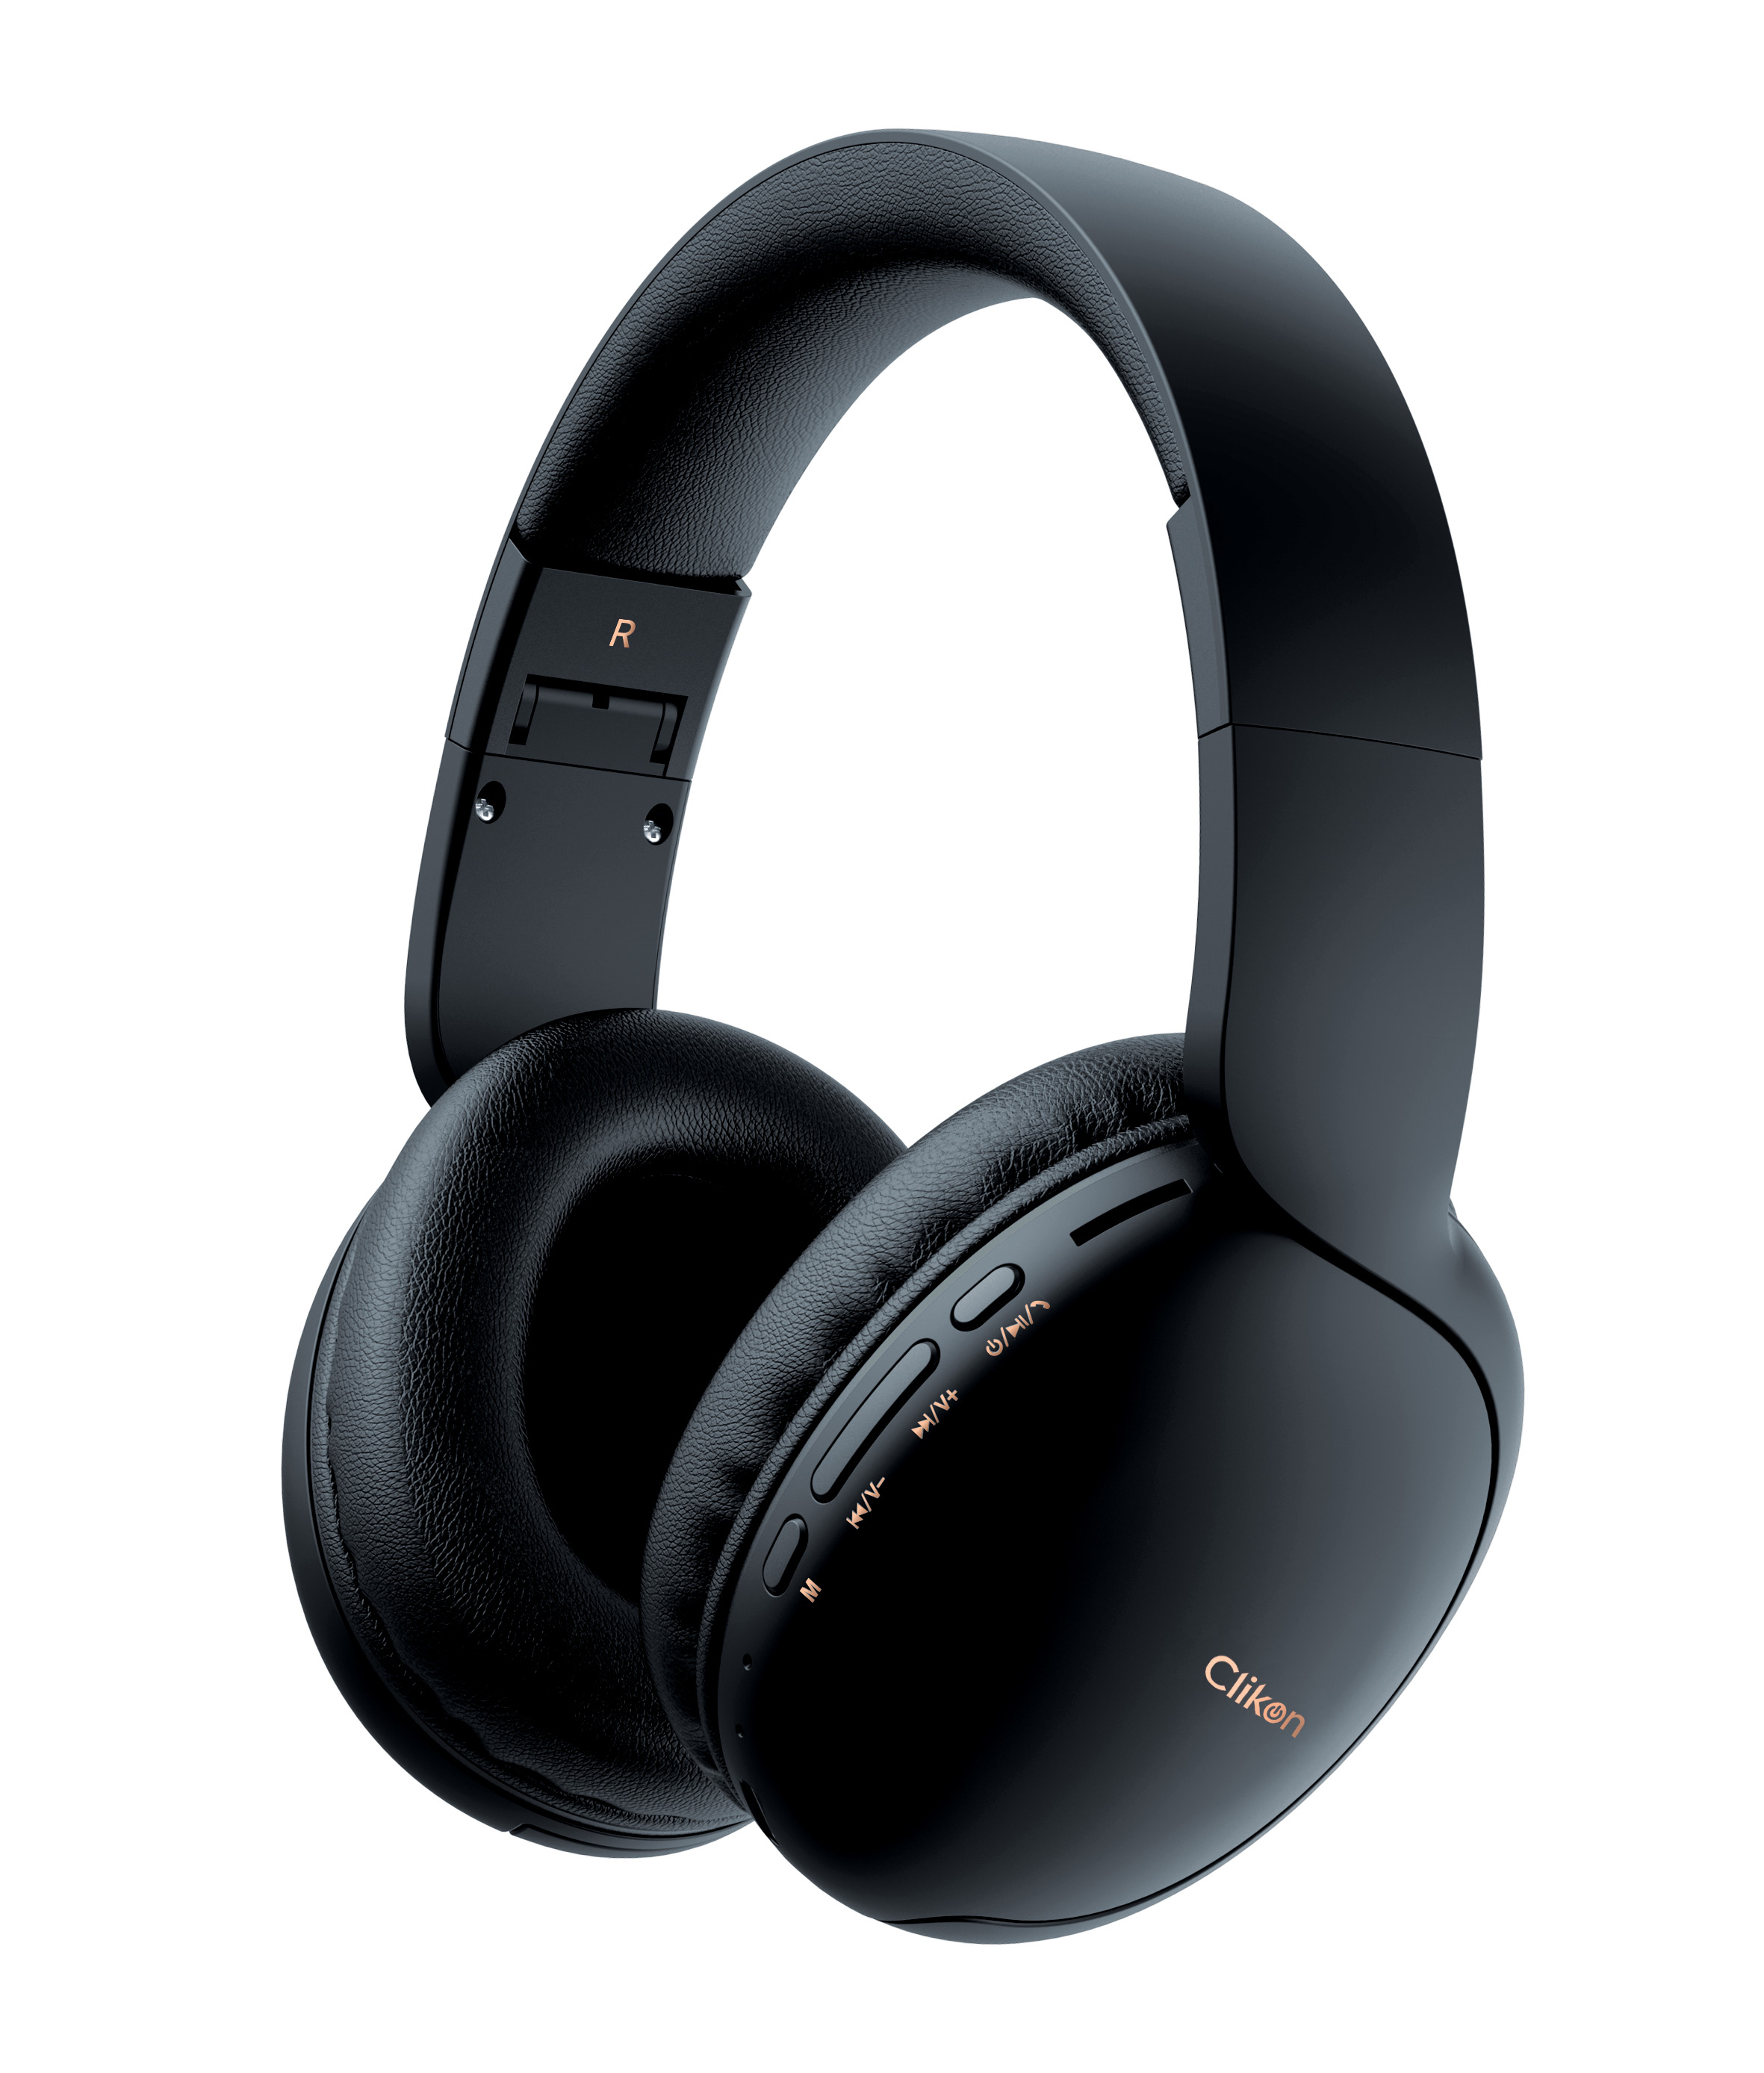 Clikon Wireless Foldable Headphones-Procs01 - Ck860